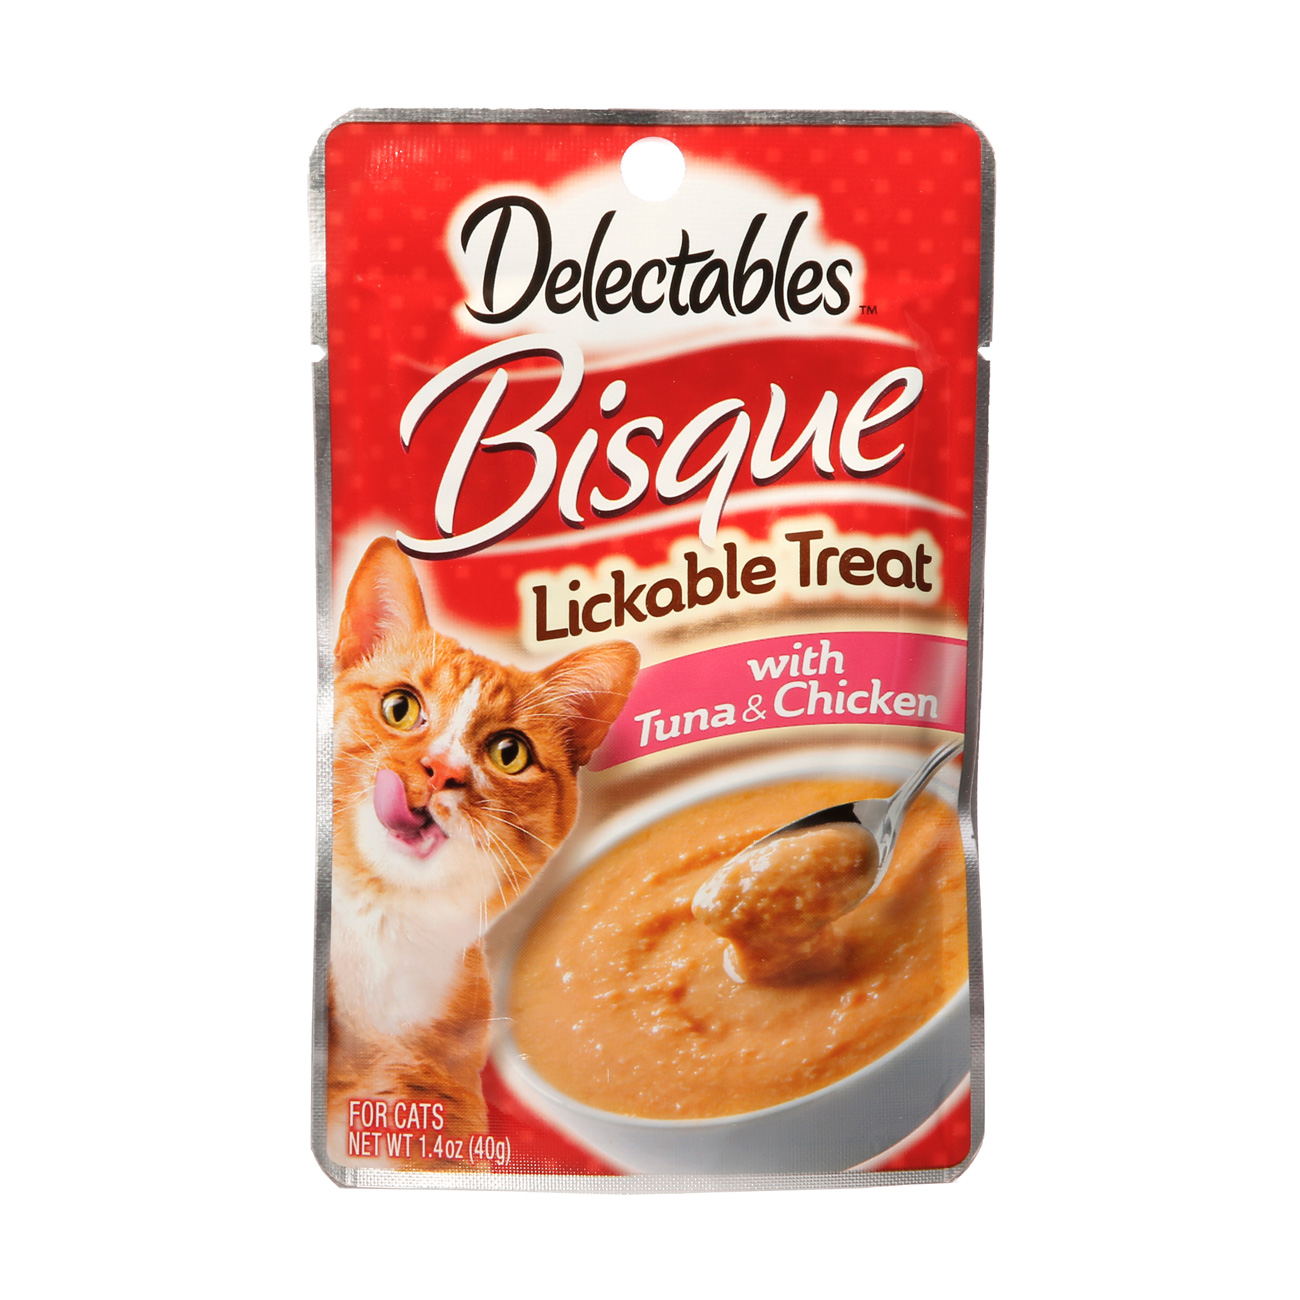 3270011056 delectables lickable treat bisque tuna chicken front 1300x1300 2